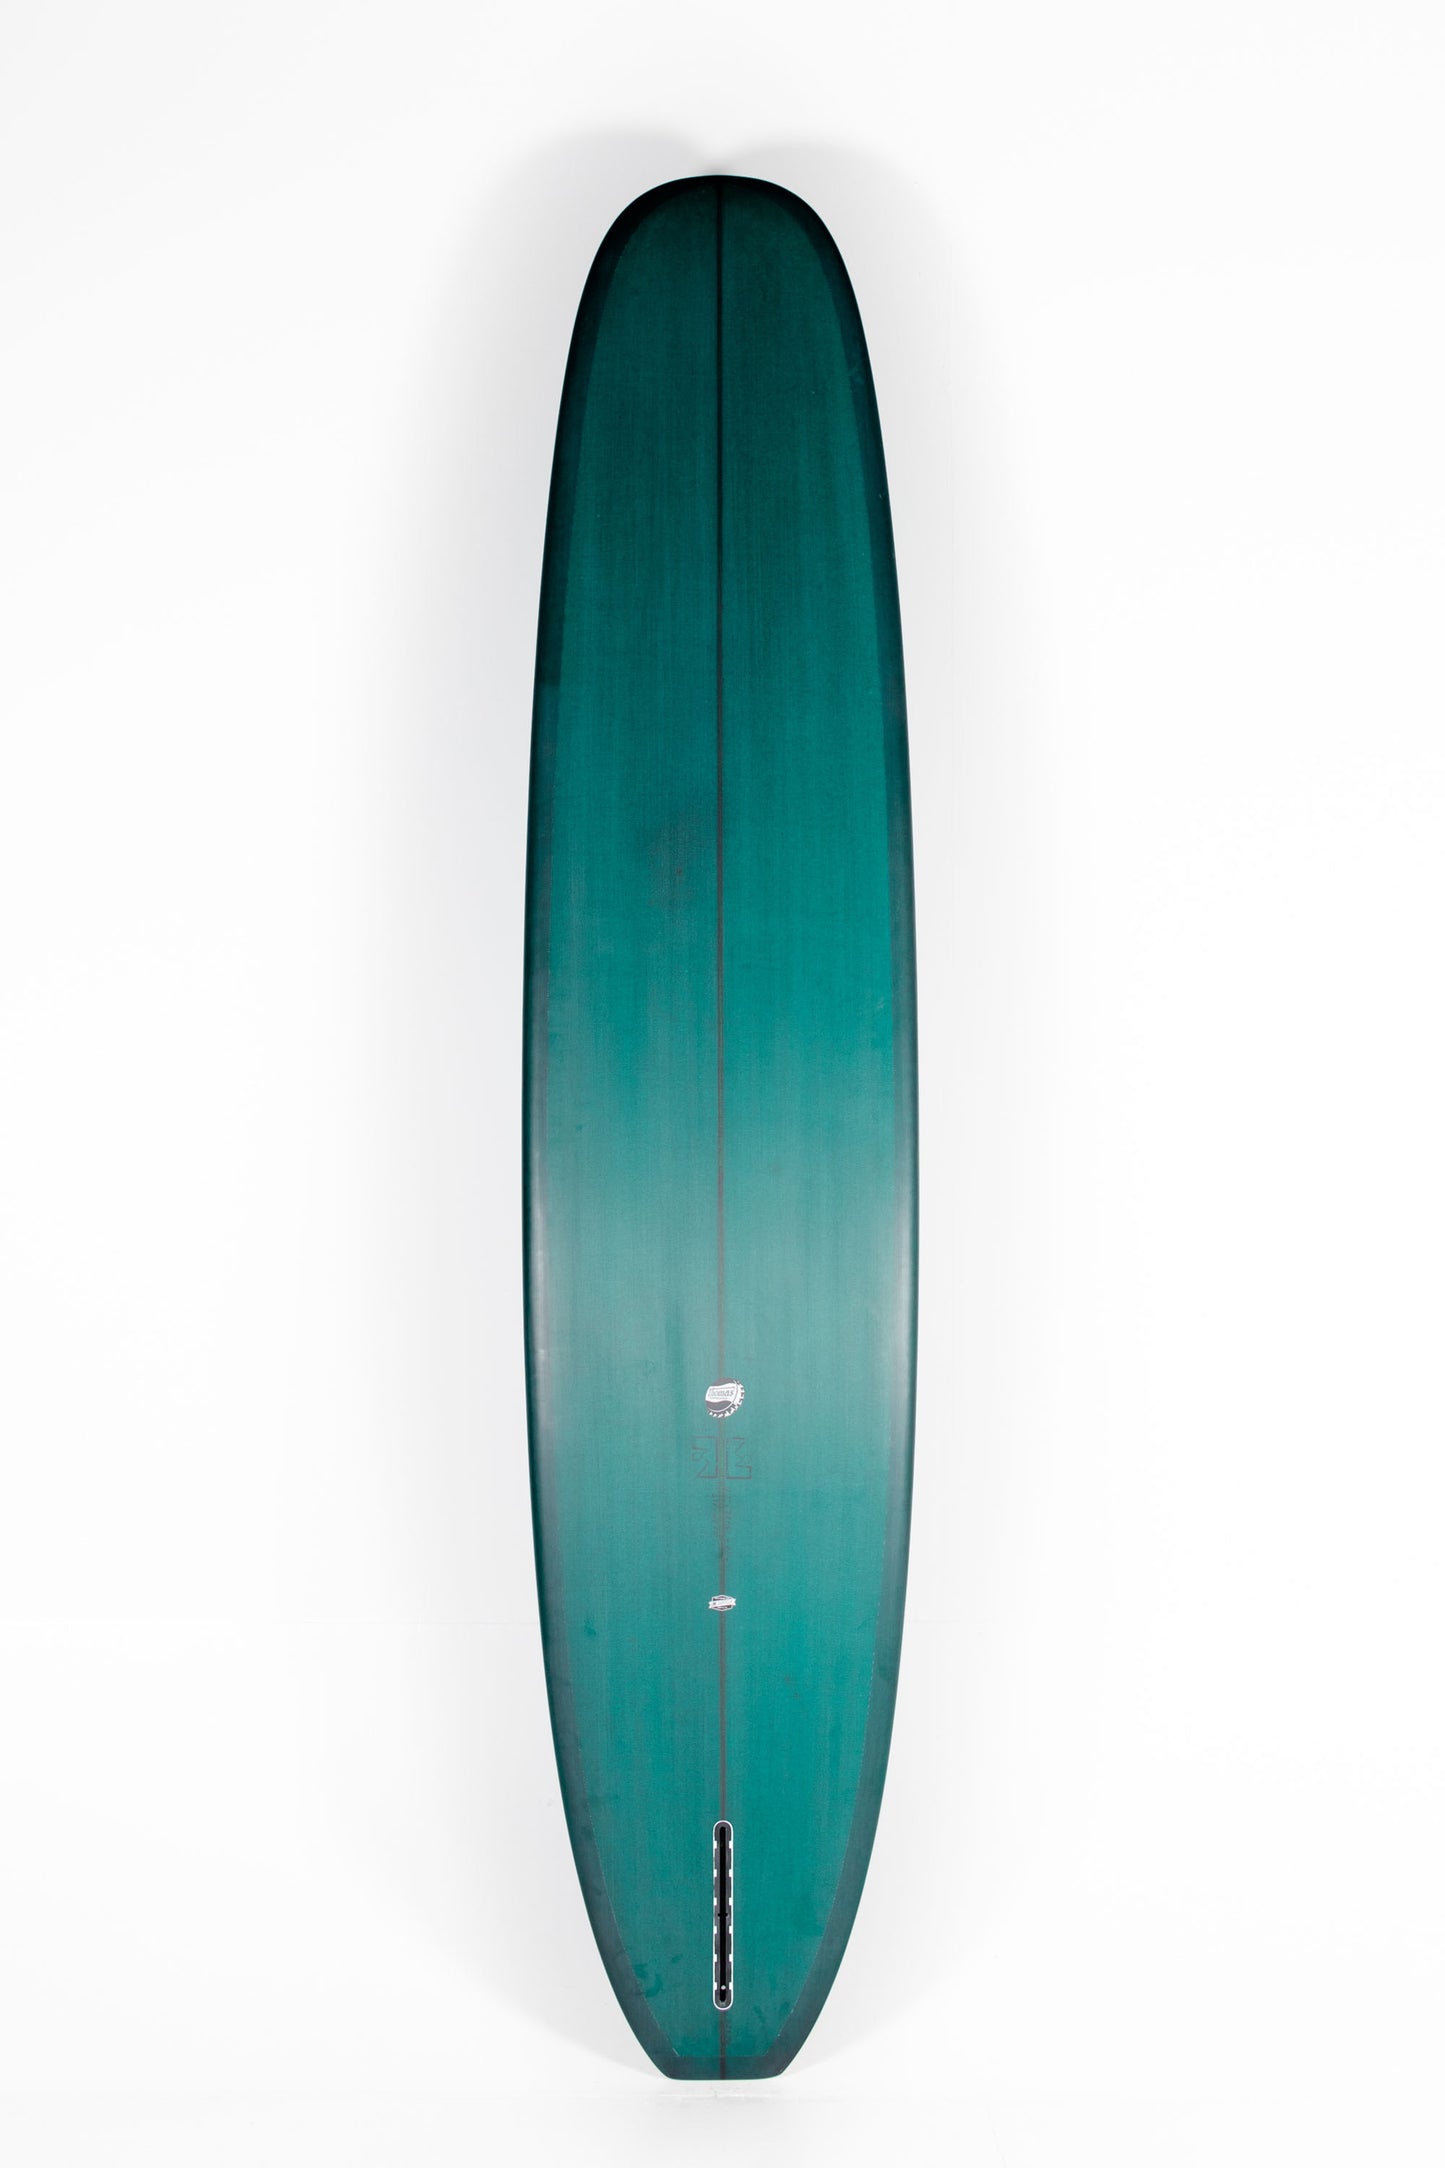 Pukas Surf Shop - Thomas Surfboards - STEP DECK - 9'3"x 22 3/4 x 2 3/4 - Ref. STEPDECK93